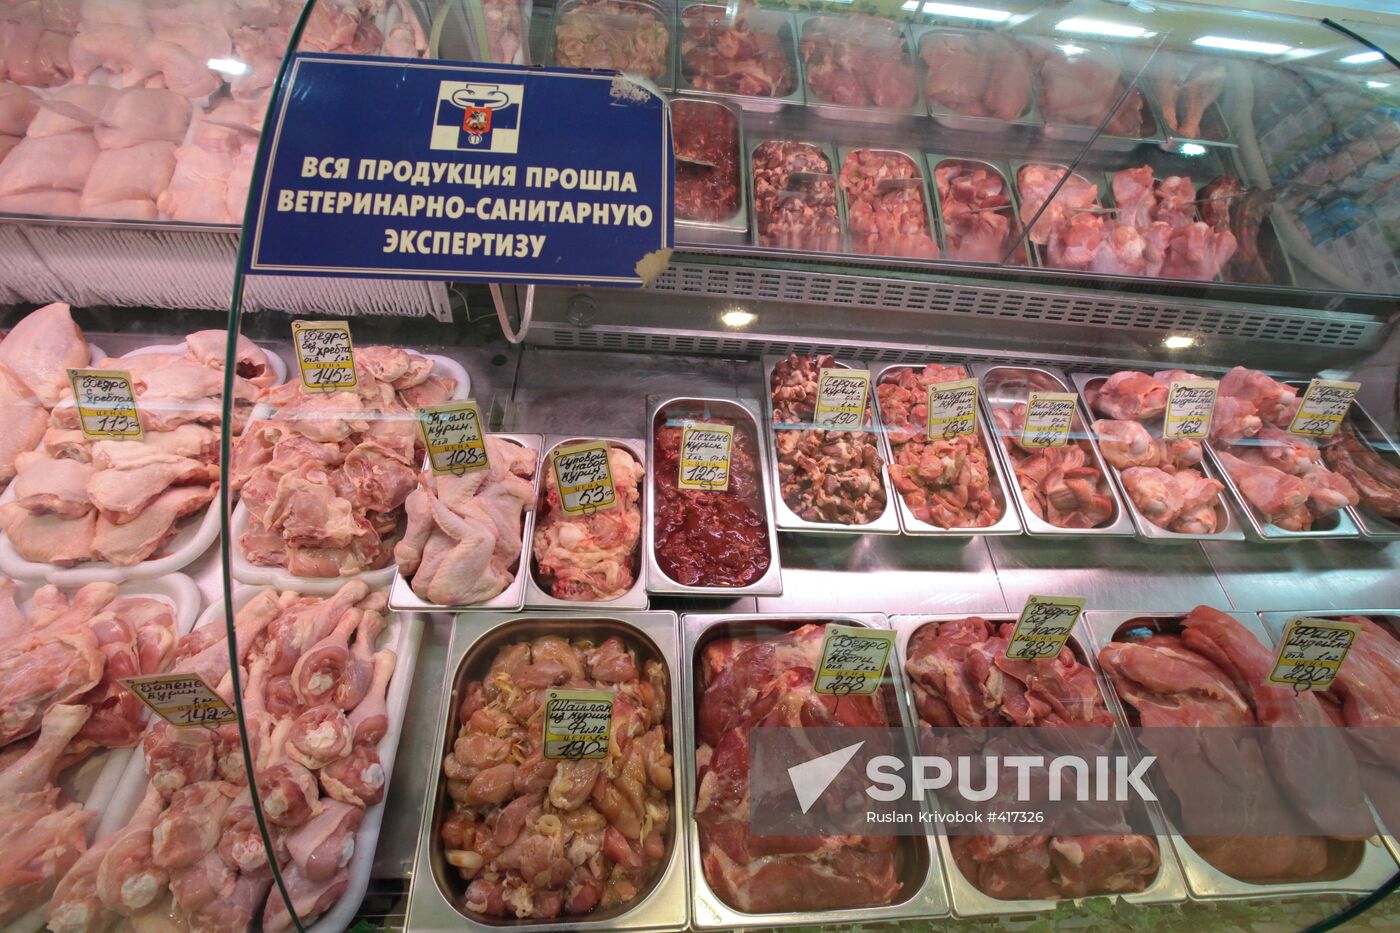 Rogozhsky supermarket in Moscow